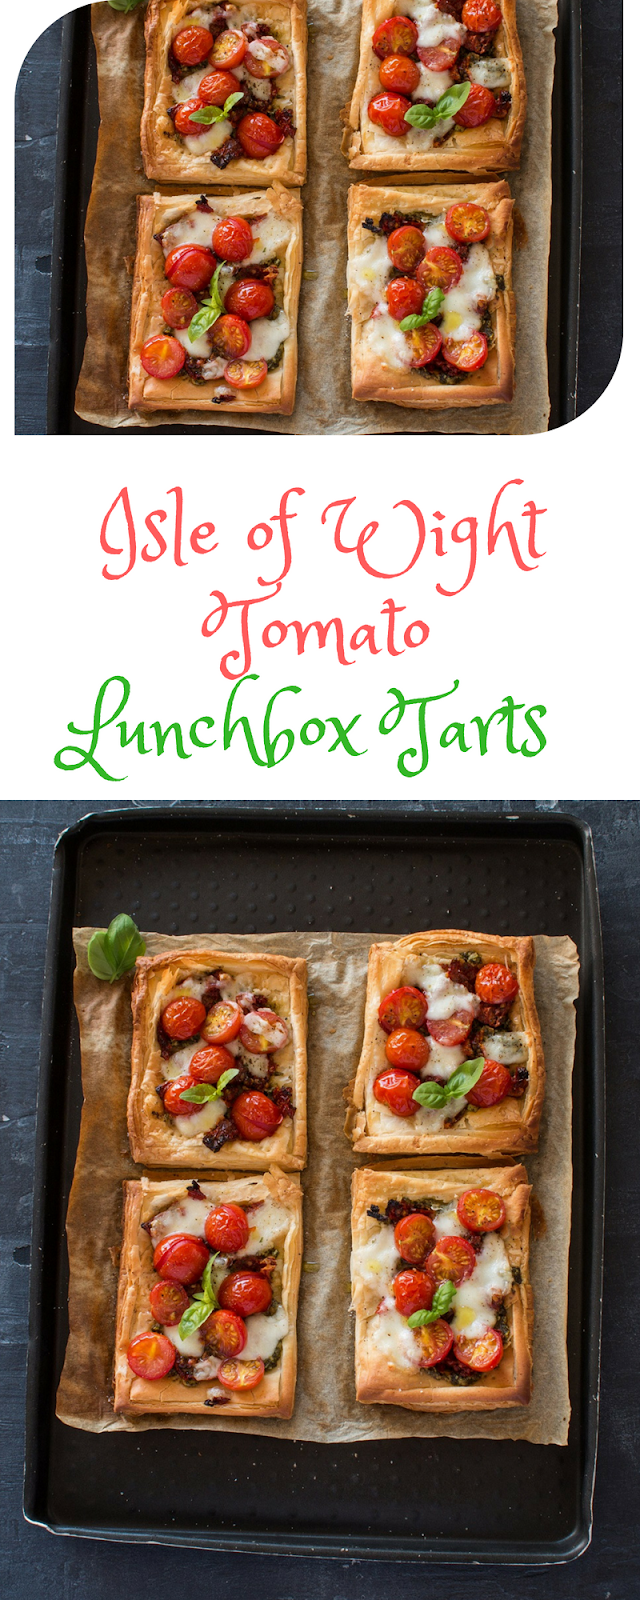 Isle of Wight Tomato Lunchbox Tarts